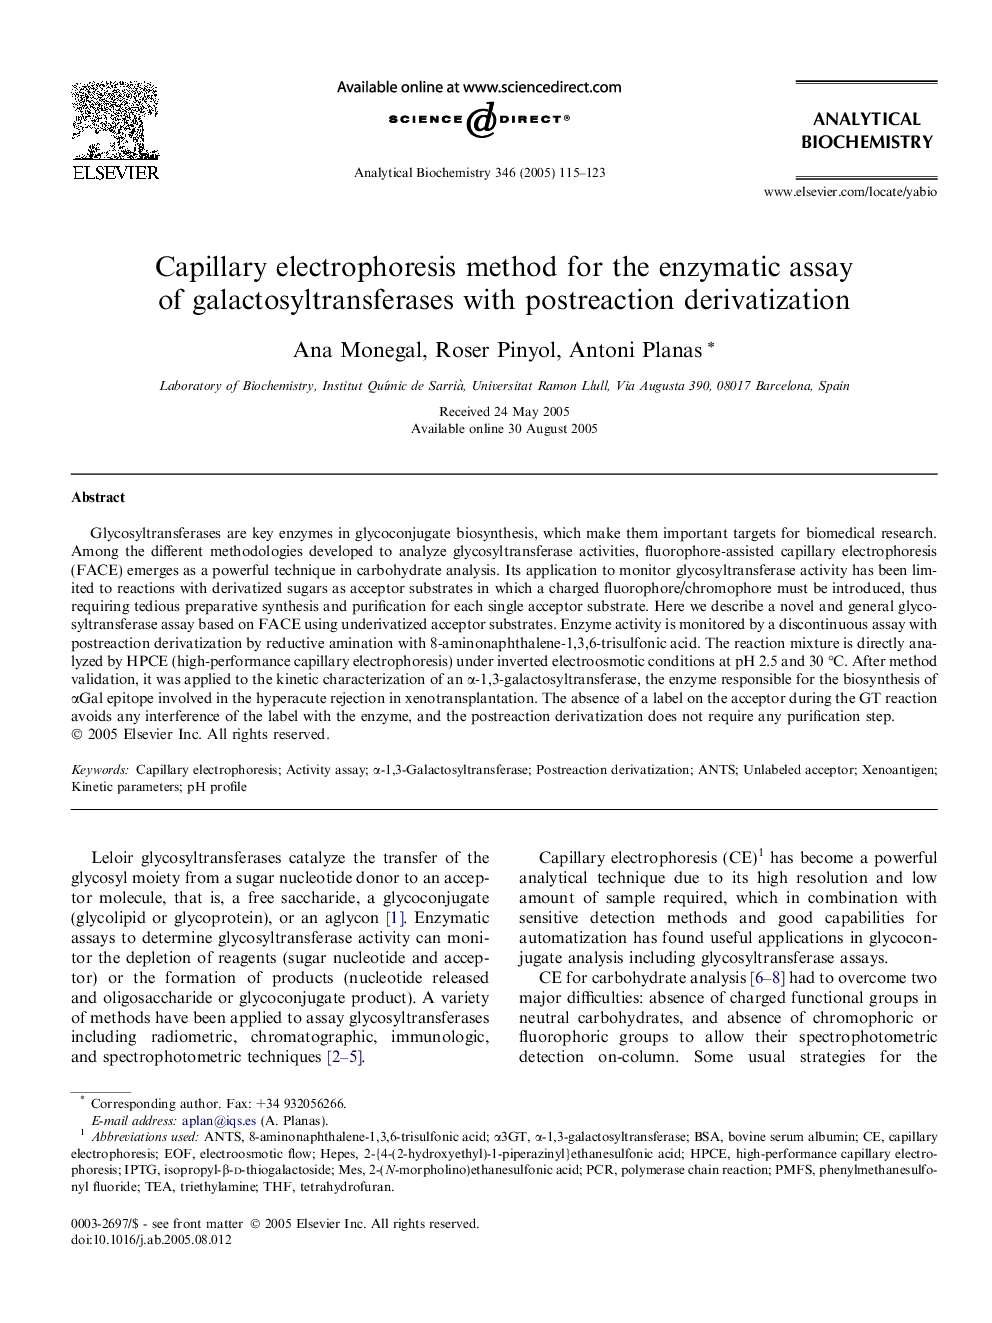 Capillary electrophoresis method for the enzymatic assay of galactosyltransferases with postreaction derivatization